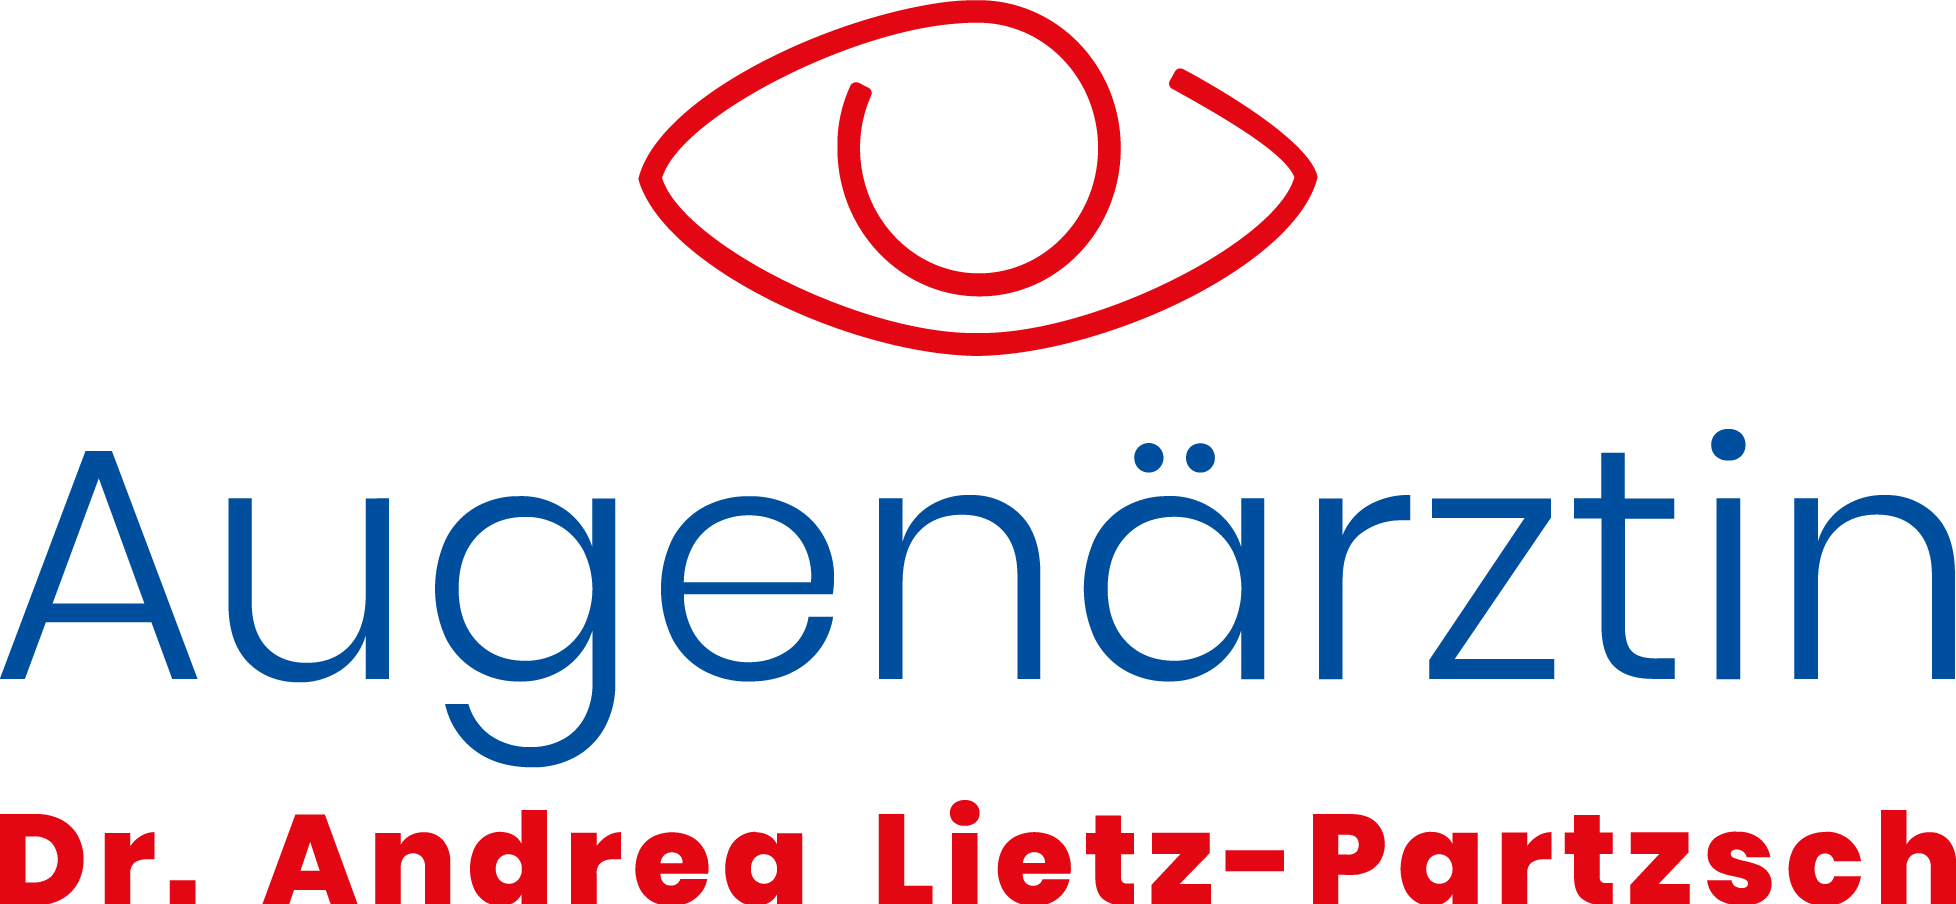 Augenarzt Berlin Augenärztin Augenarztpraxis Schlachtensee Zehlendorf Dr. Lietz-Partzsch